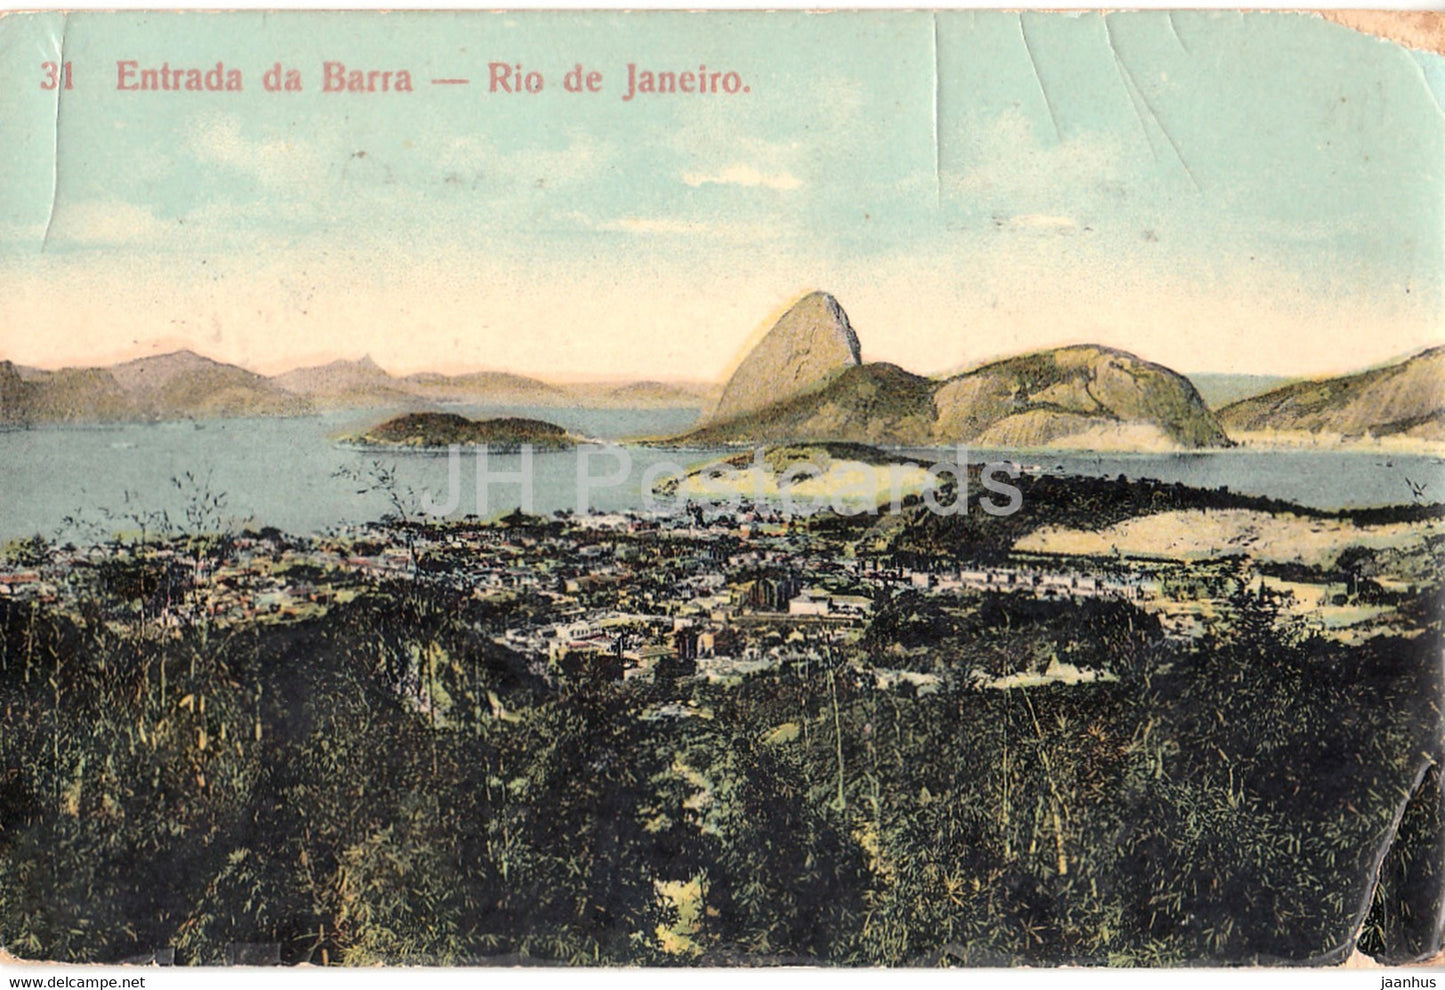 Rio de Janeiro - Entrada da Barra - 31 - old postcard - Brazil - used - JH Postcards